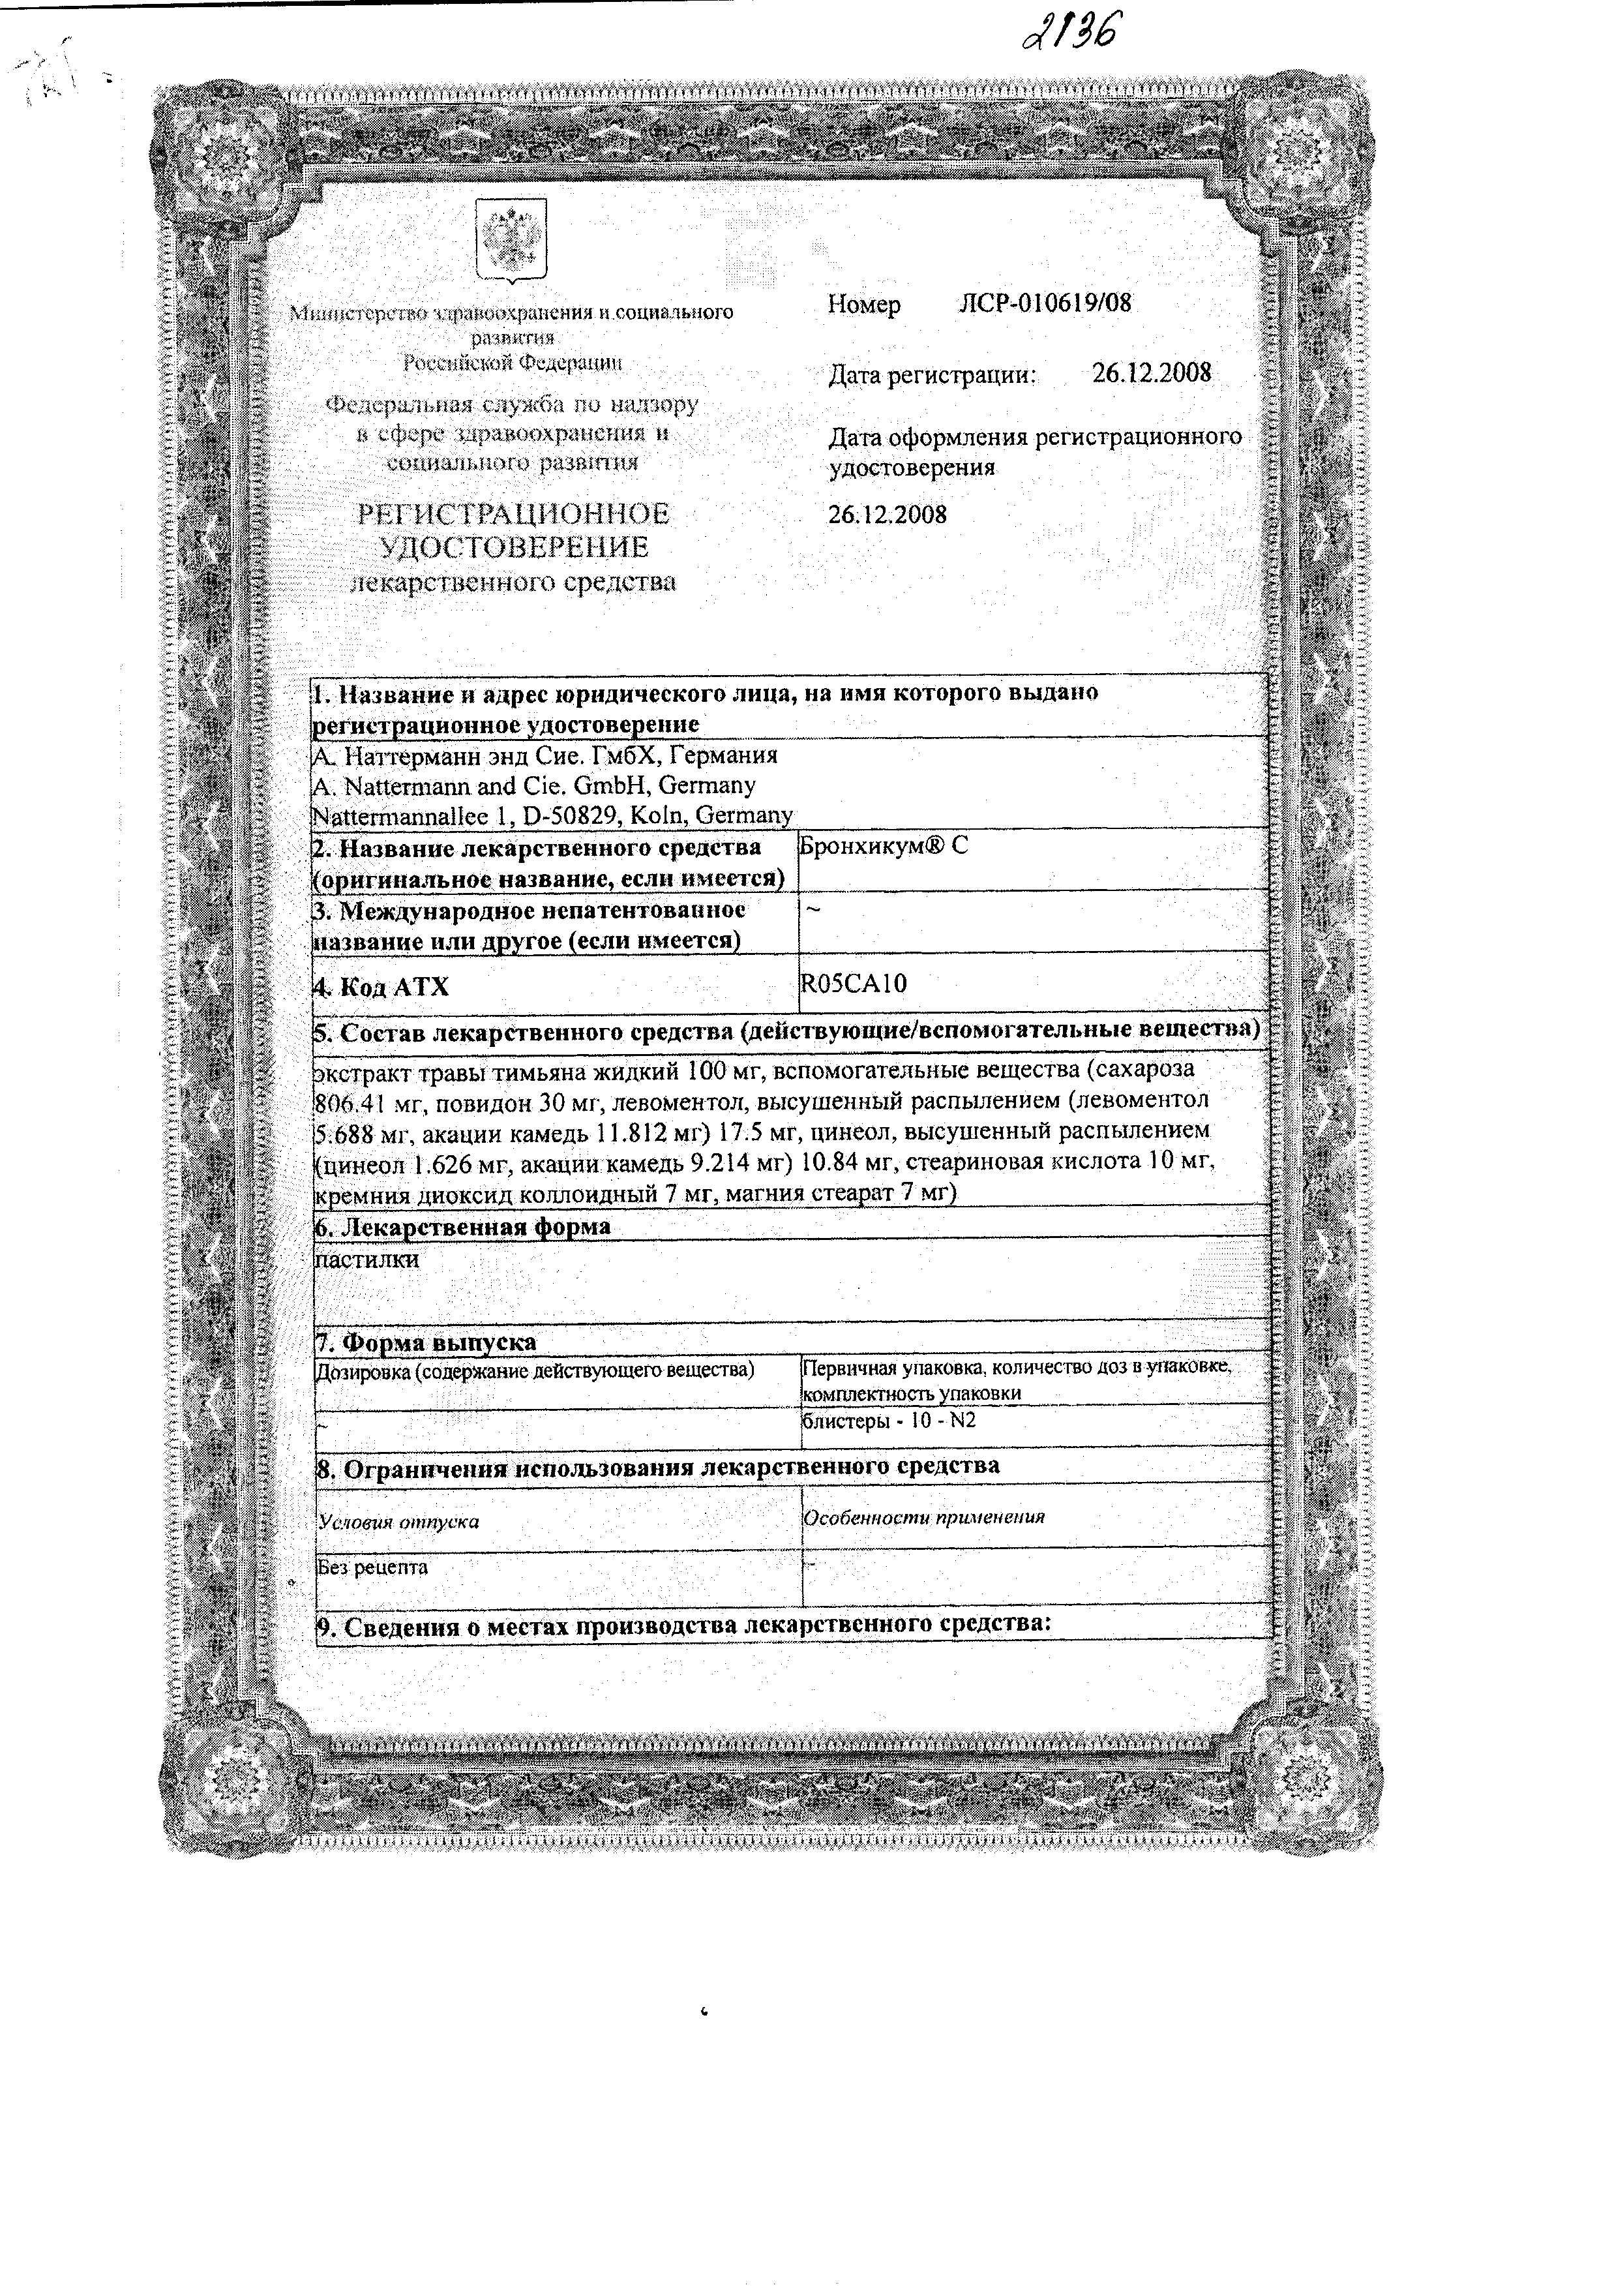 Бронхикум С сертификат